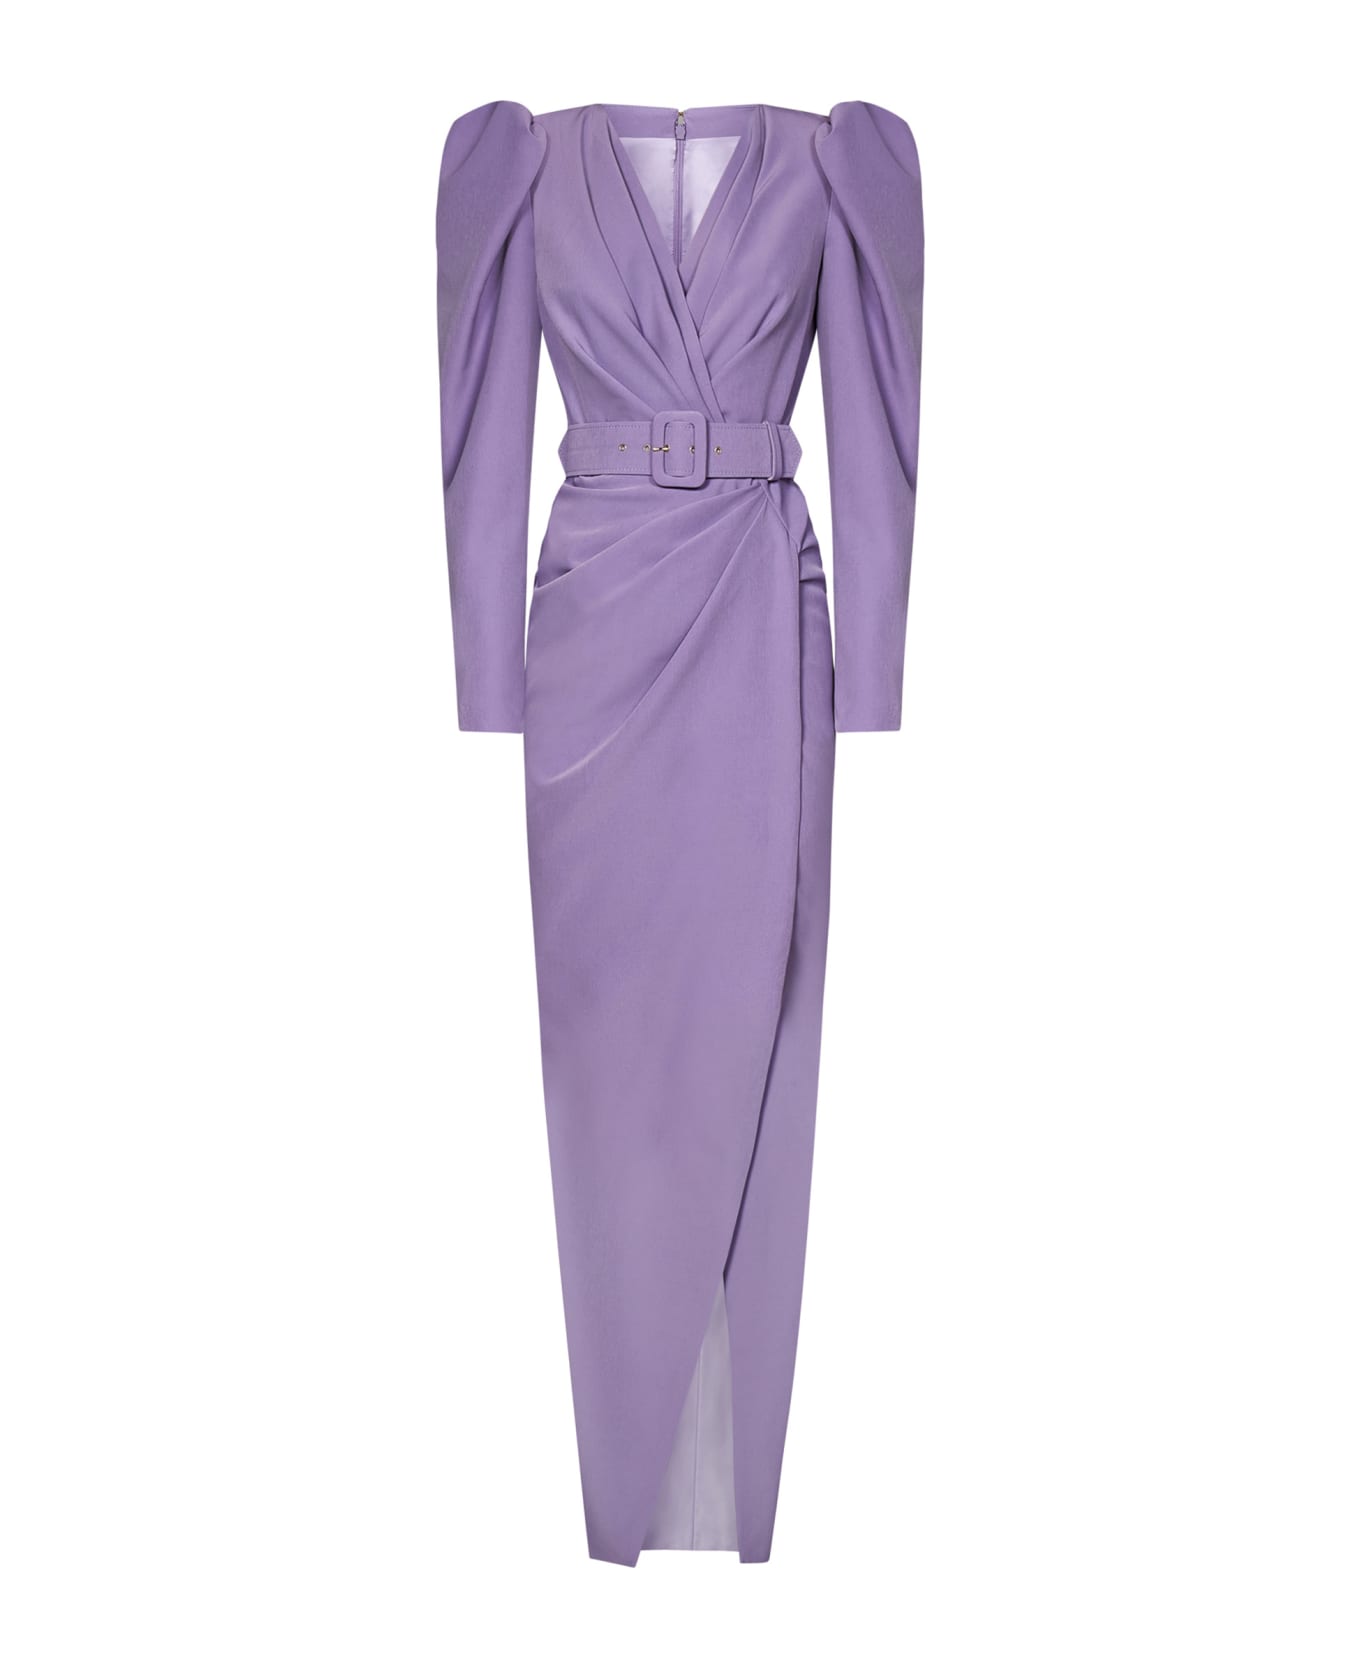 Rhea Costa Chloe Long Dress - Purple